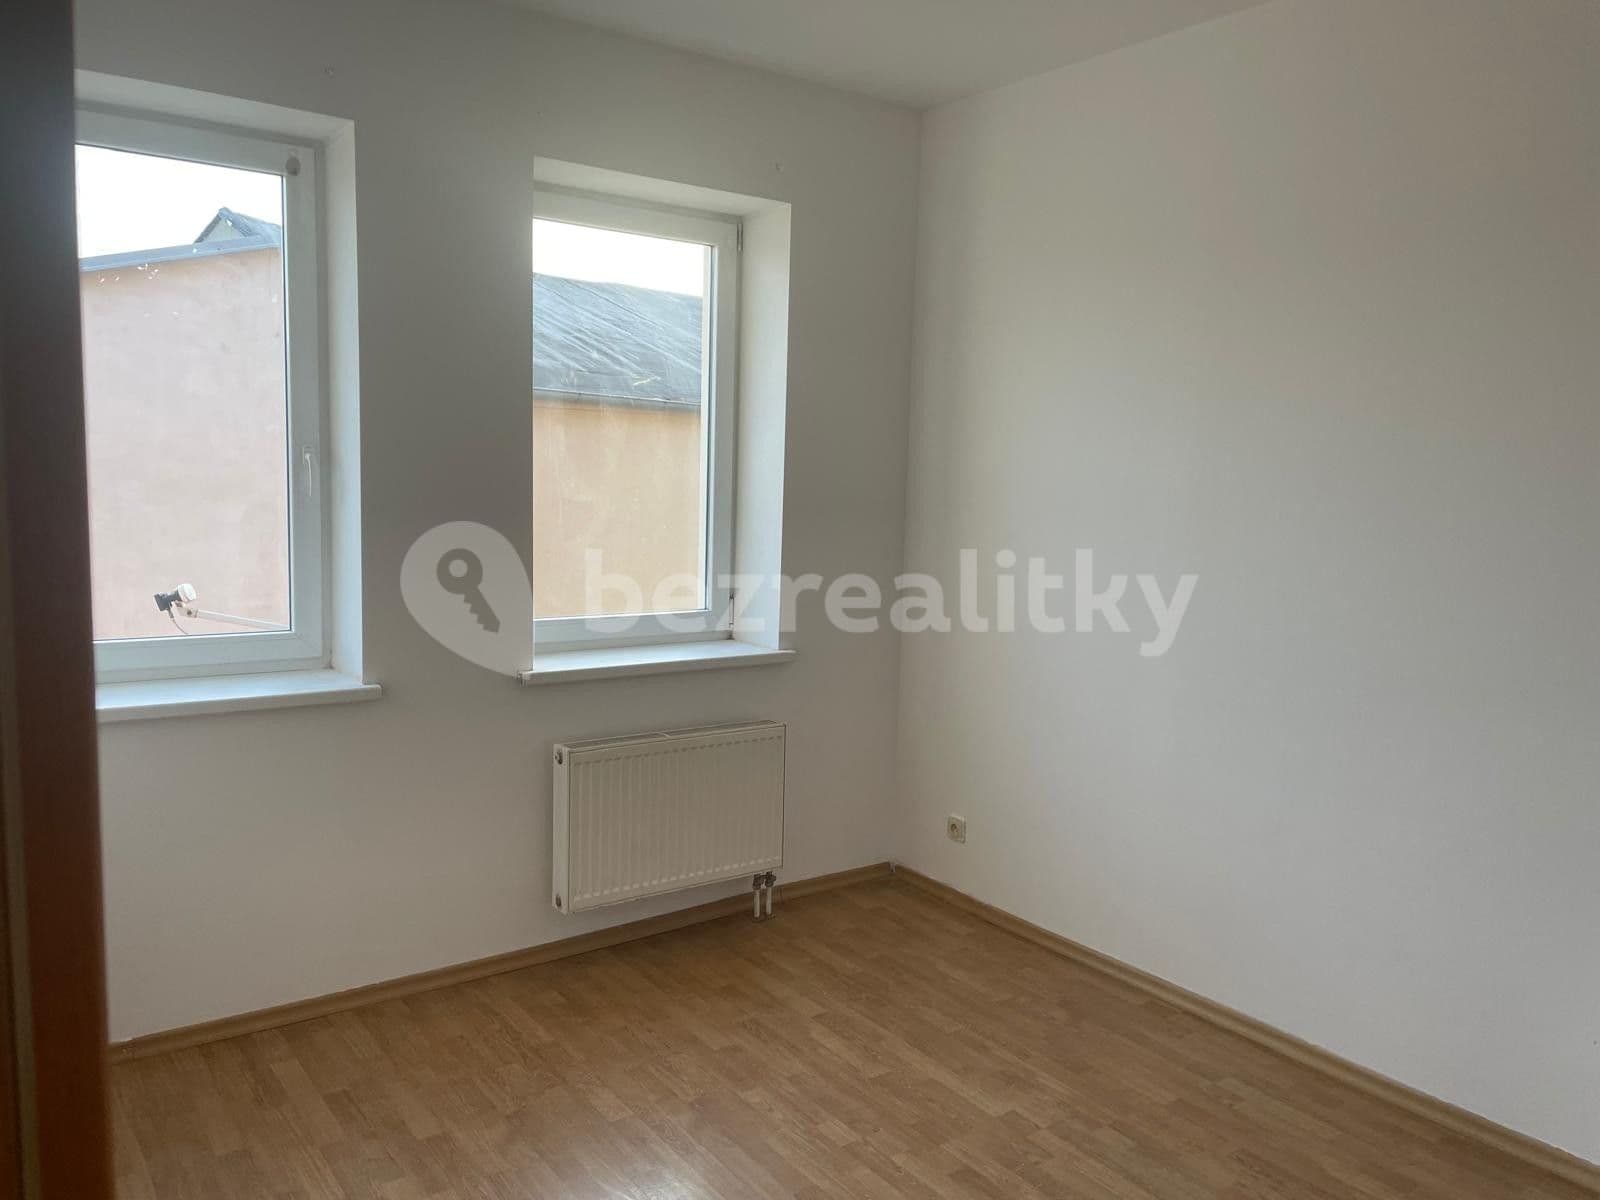 1 bedroom with open-plan kitchen flat to rent, 54 m², Zemská, Teplice, Ústecký Region